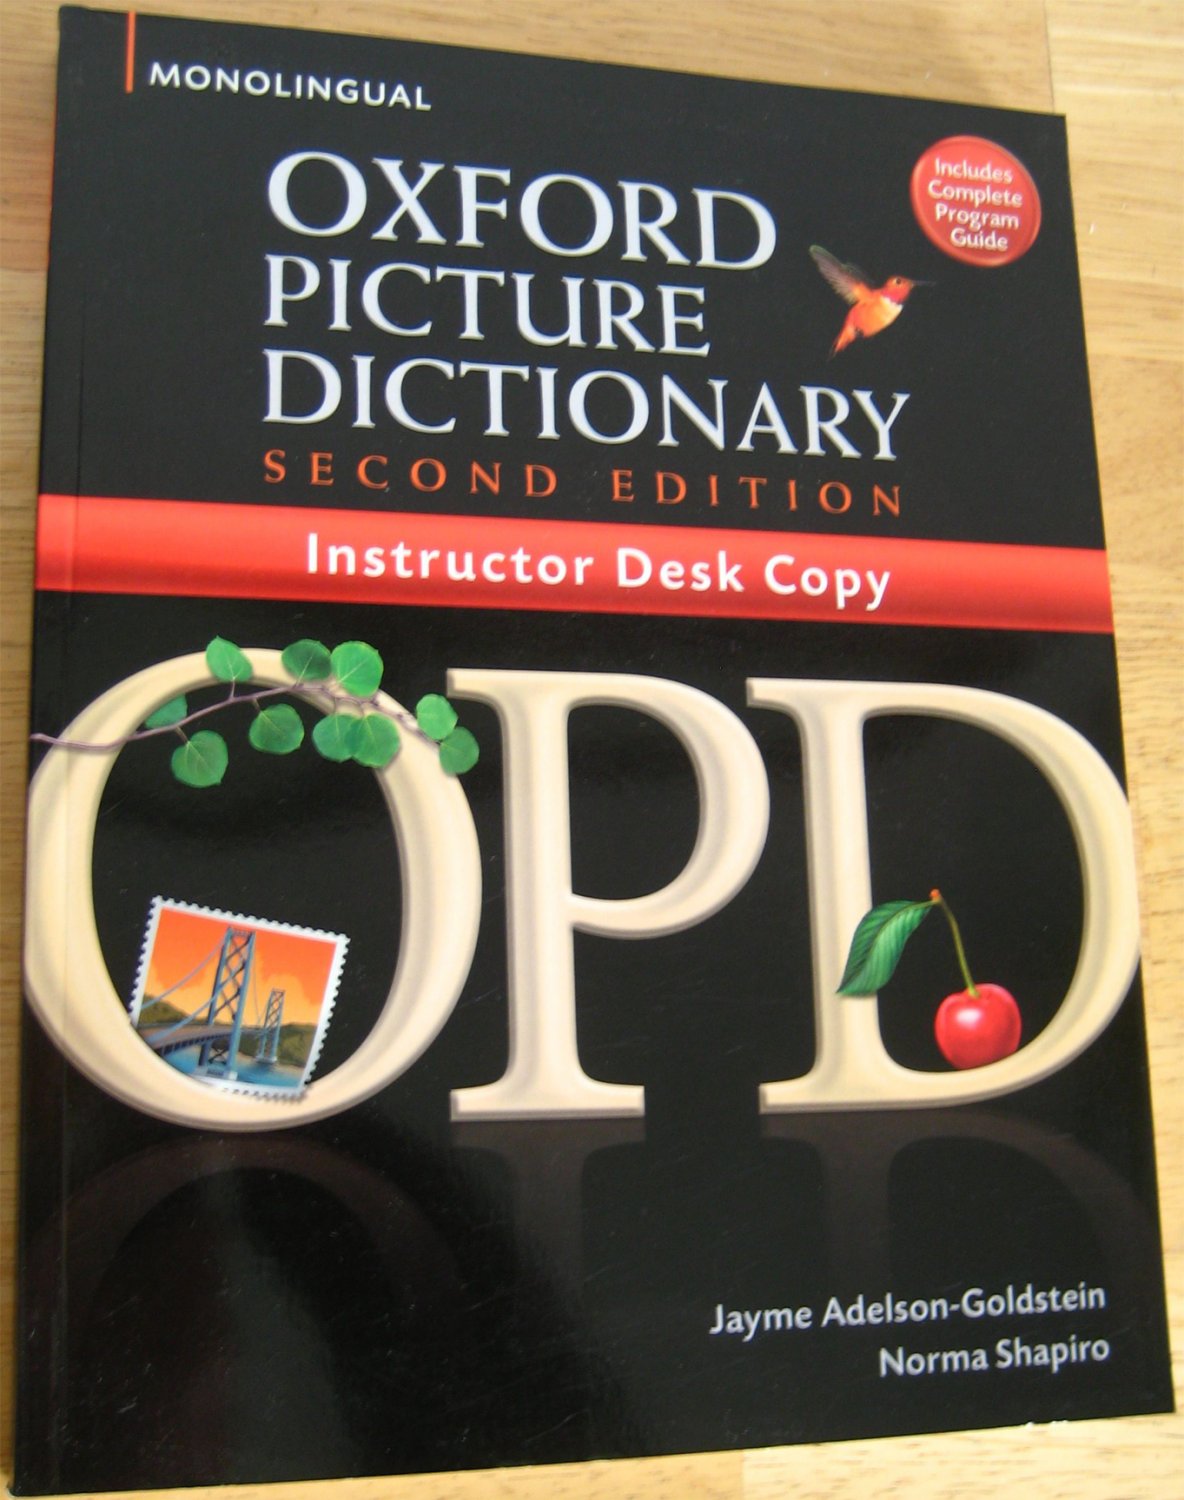 Oxford english dictionary 2nd ed v4.0 2017.